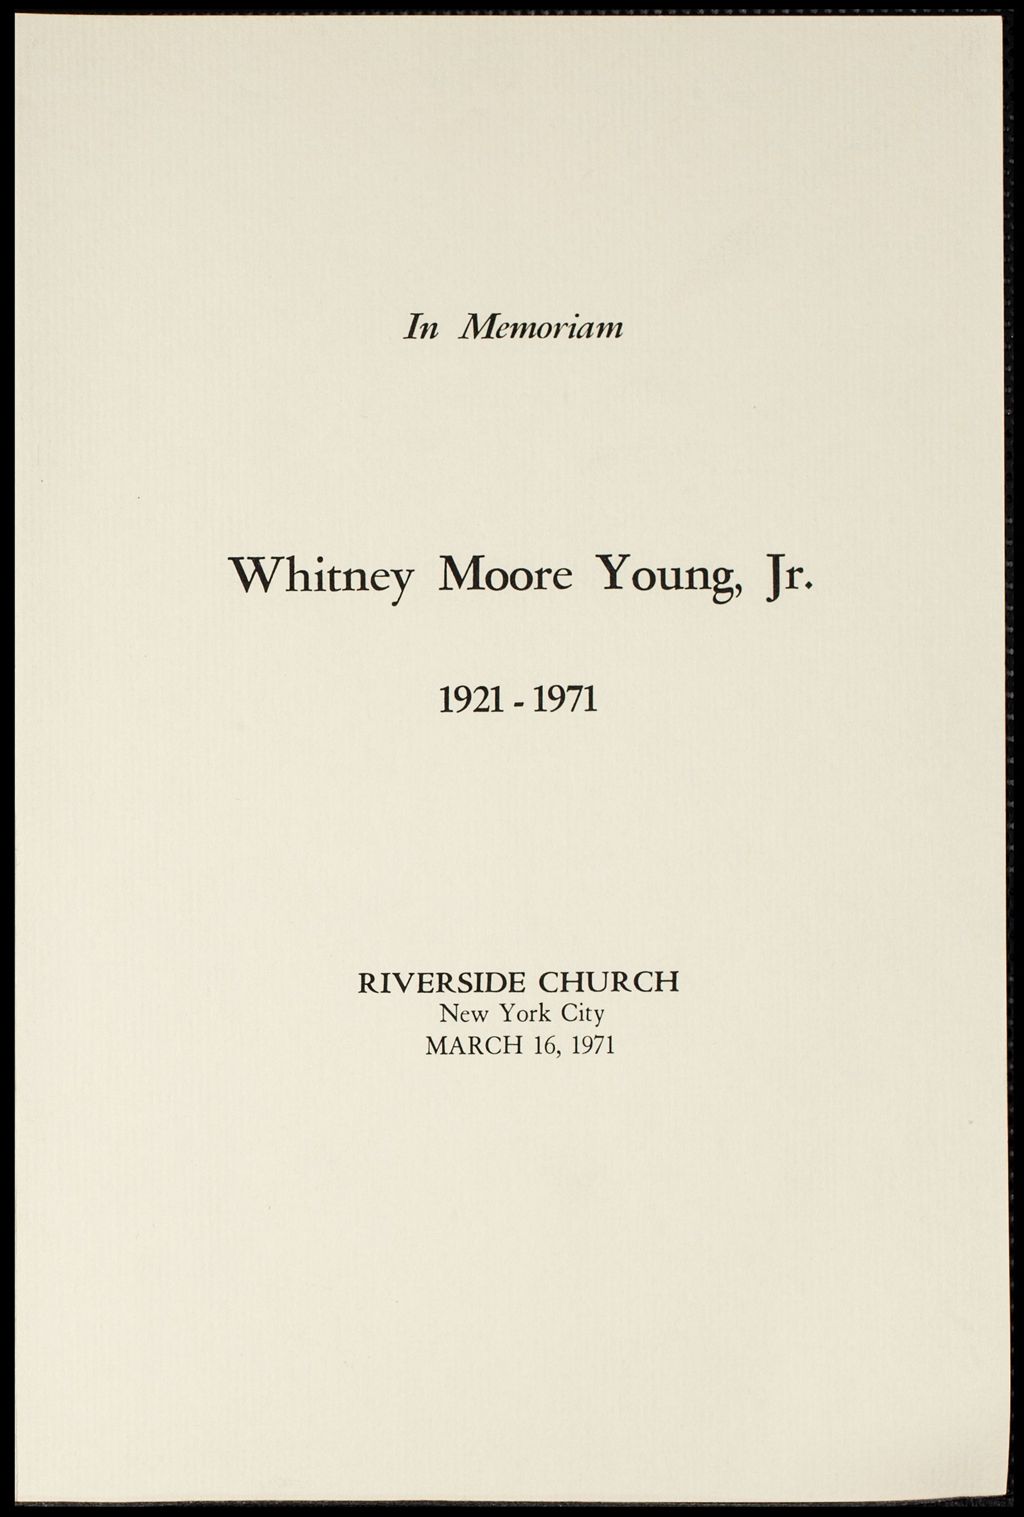 Miniature of Whitney Young tributes, 1971-1974 (Folder I-3024)